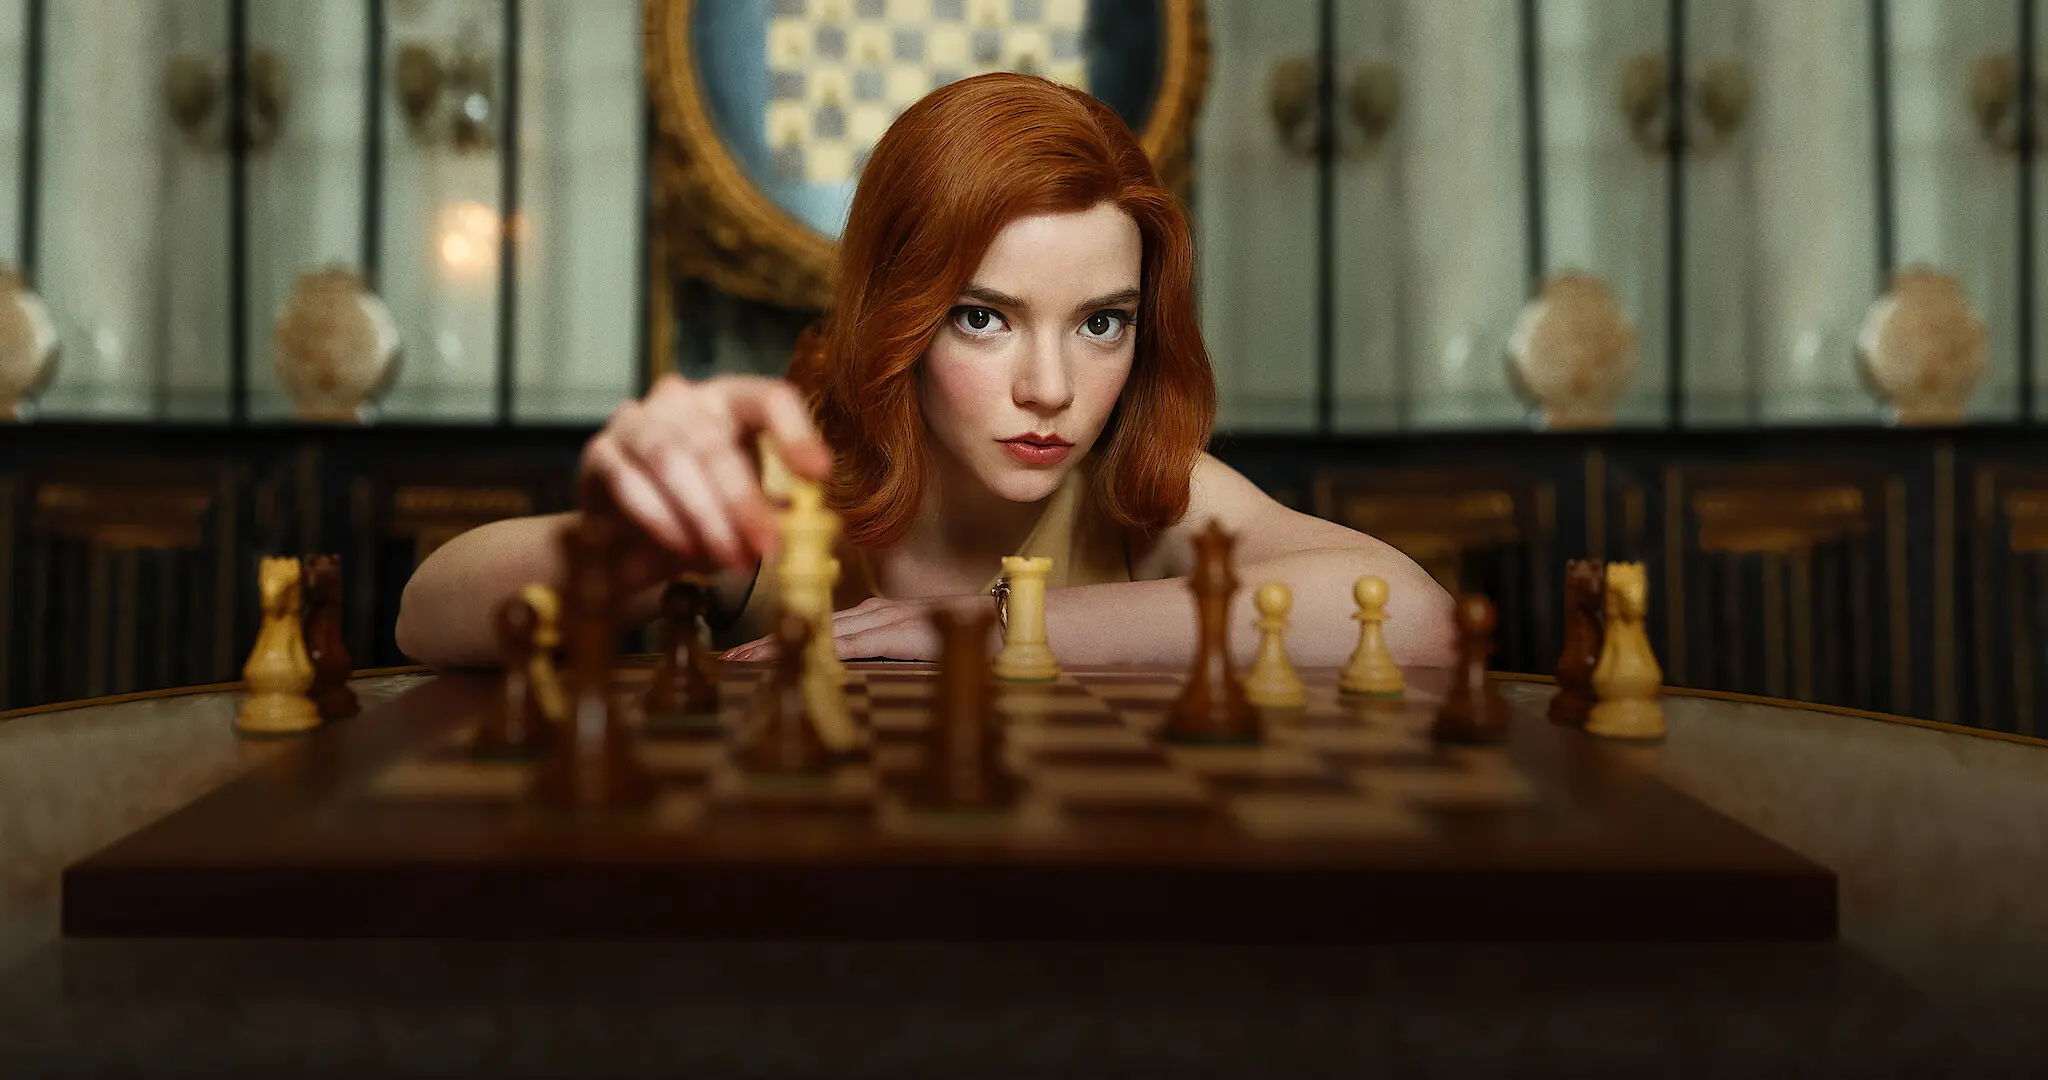 The Queen's Gambit movie review (2020)